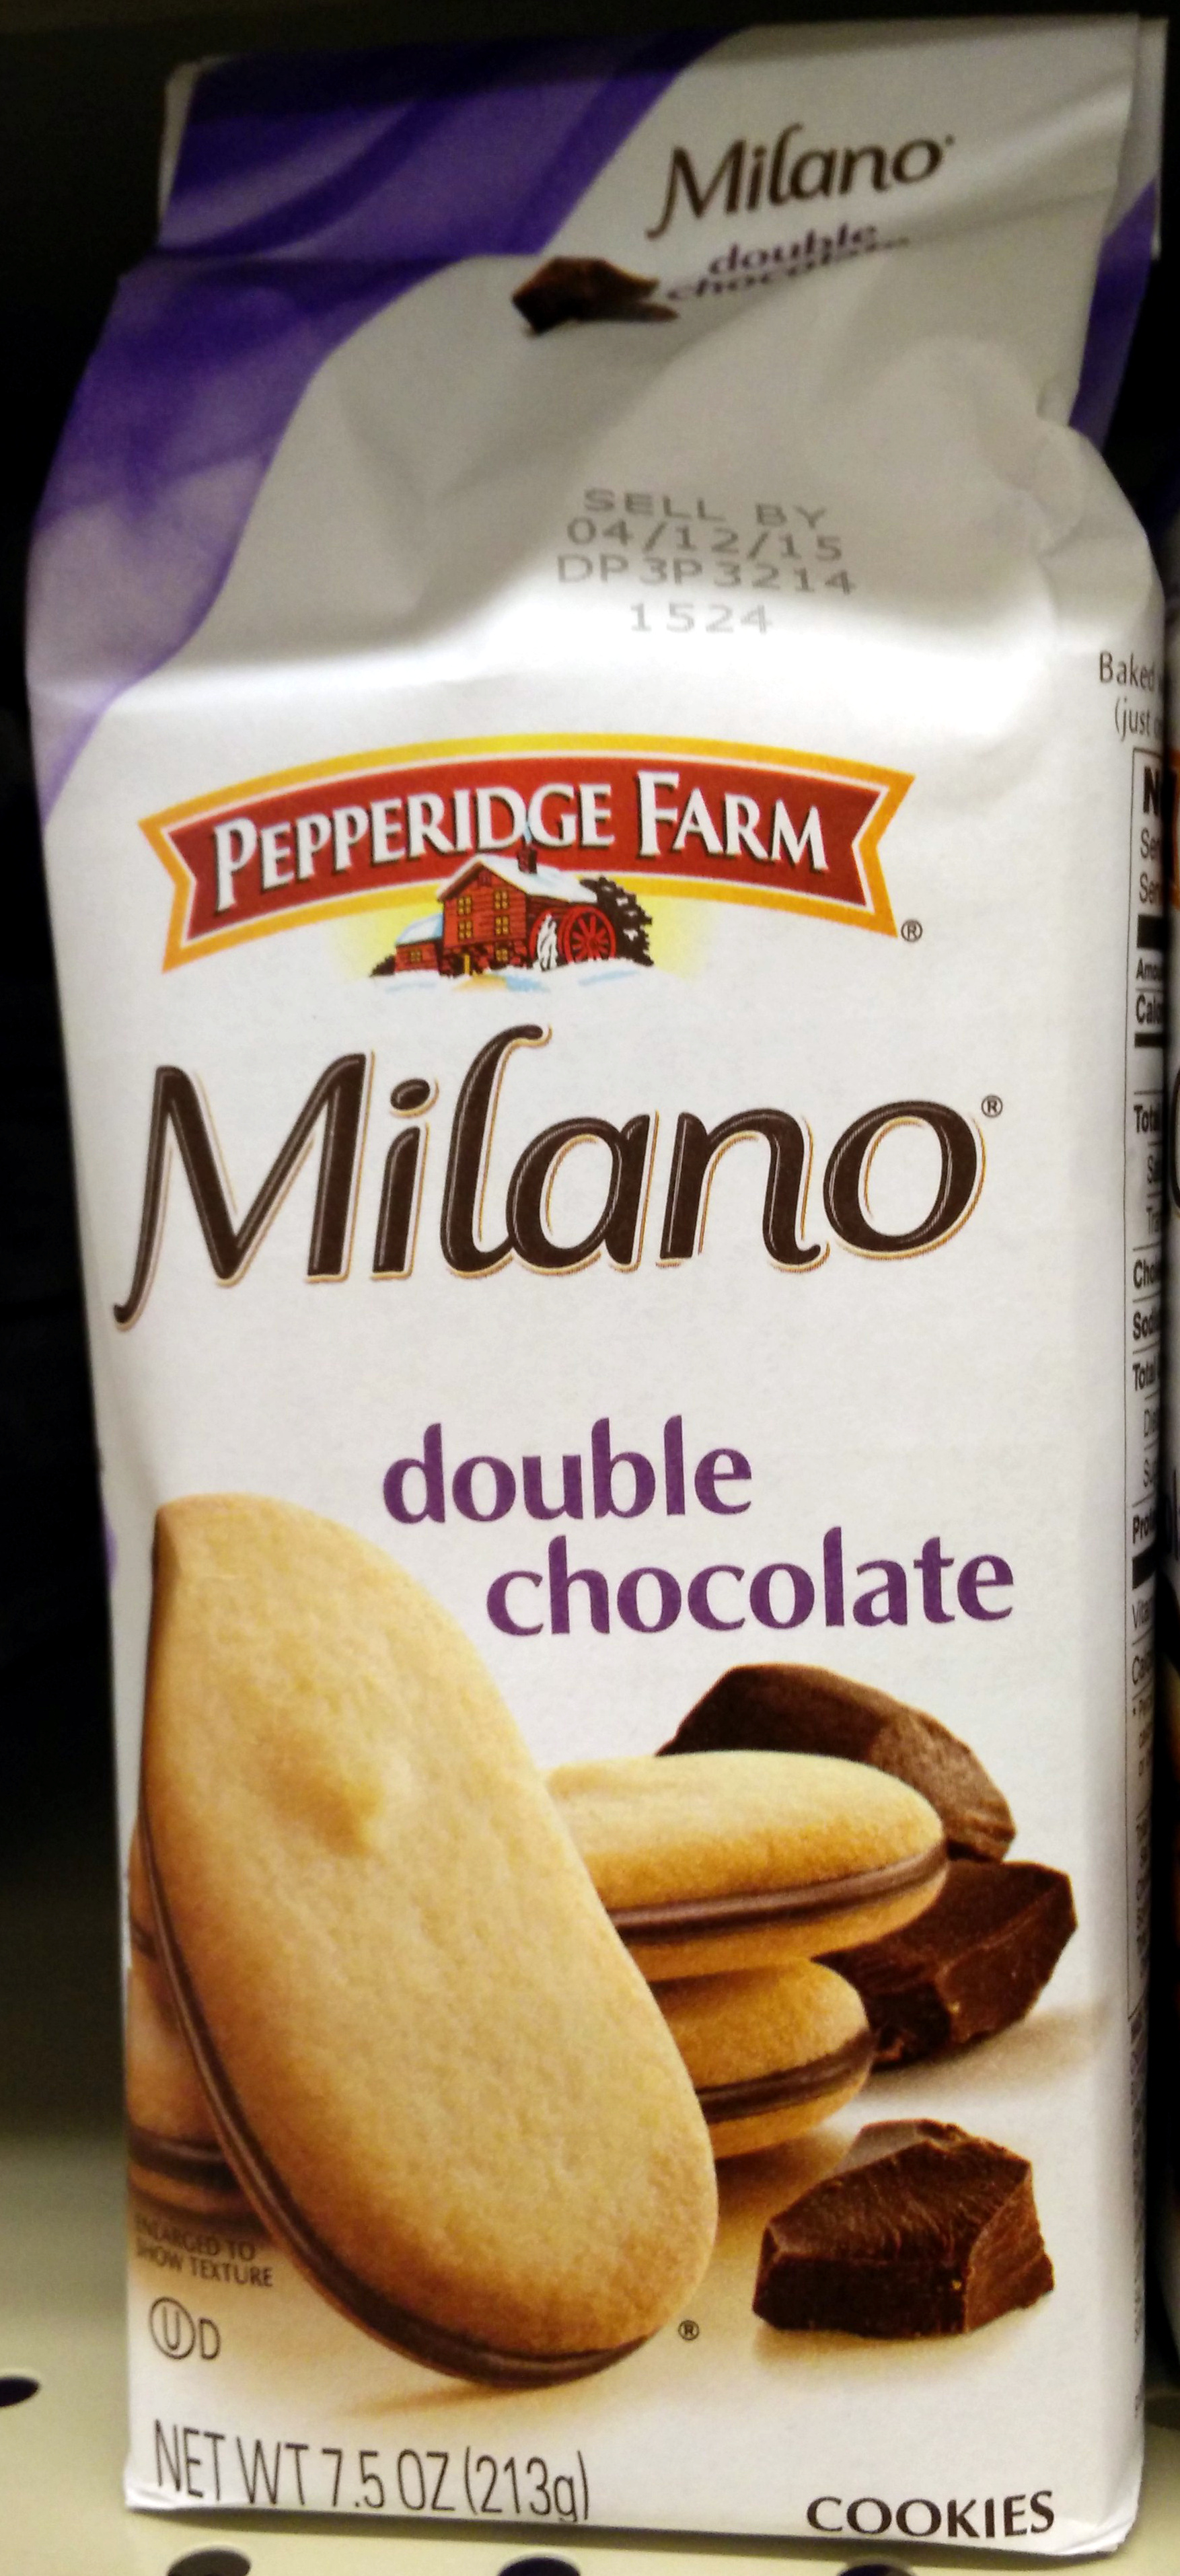 Pepperidge farm cookies choc - Product